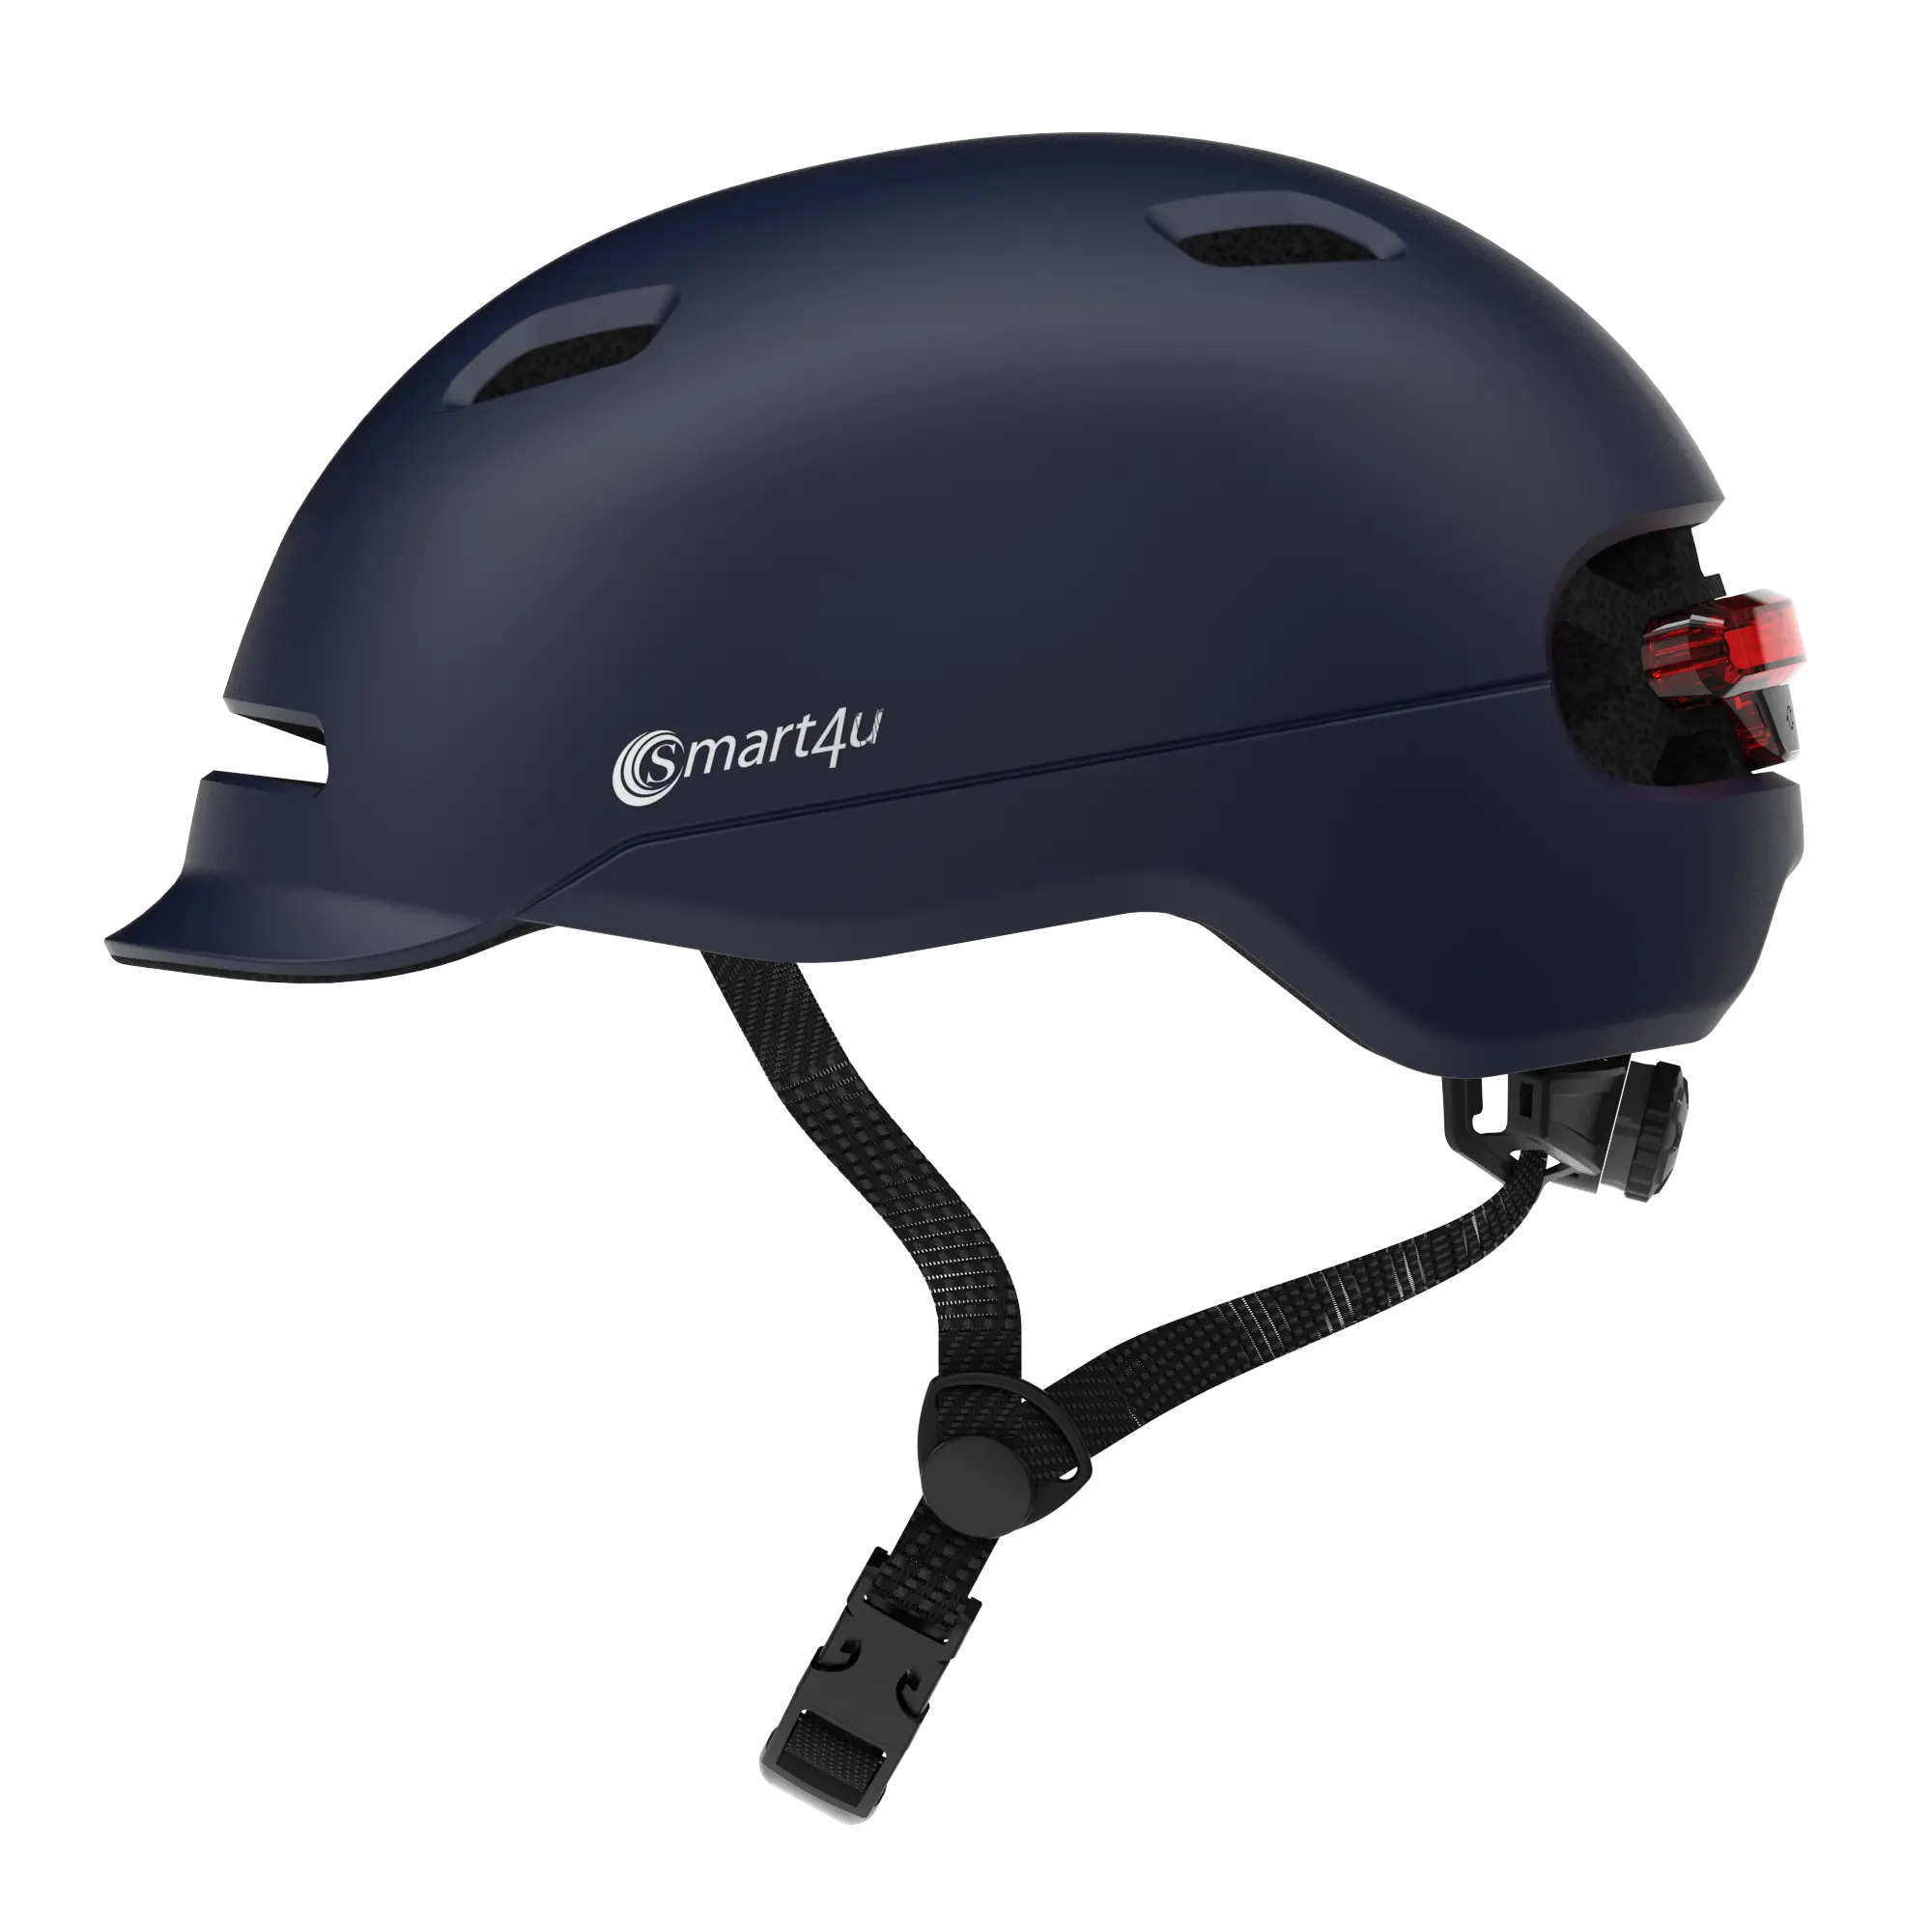 Smart4u led smart bike helmets and bicycle riding helmet breathdable with bicycle helmet sports